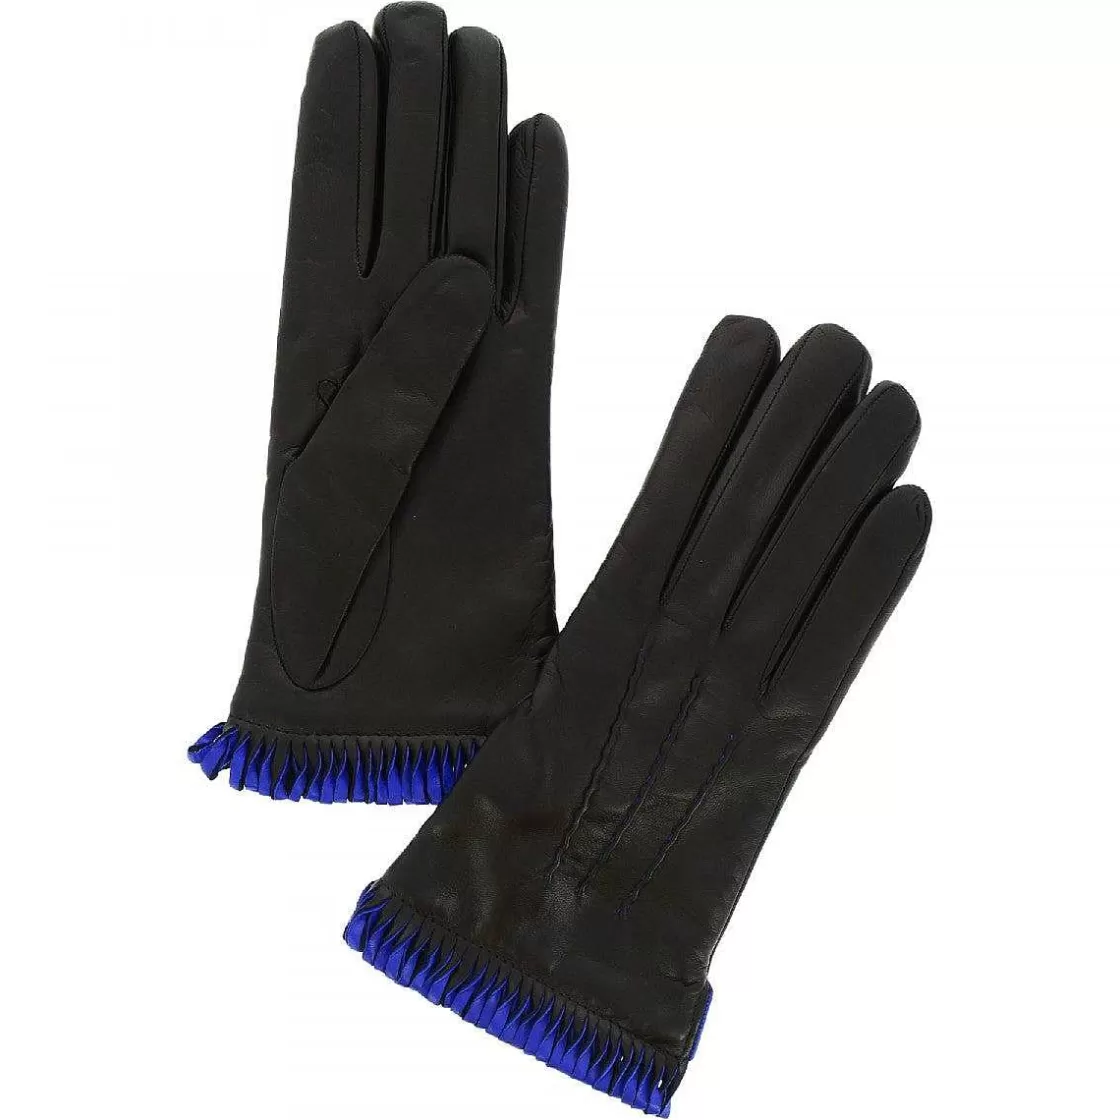 Leonardo Handmade Women'S Gloves In Black Nappa Leather With Blue Border Hot